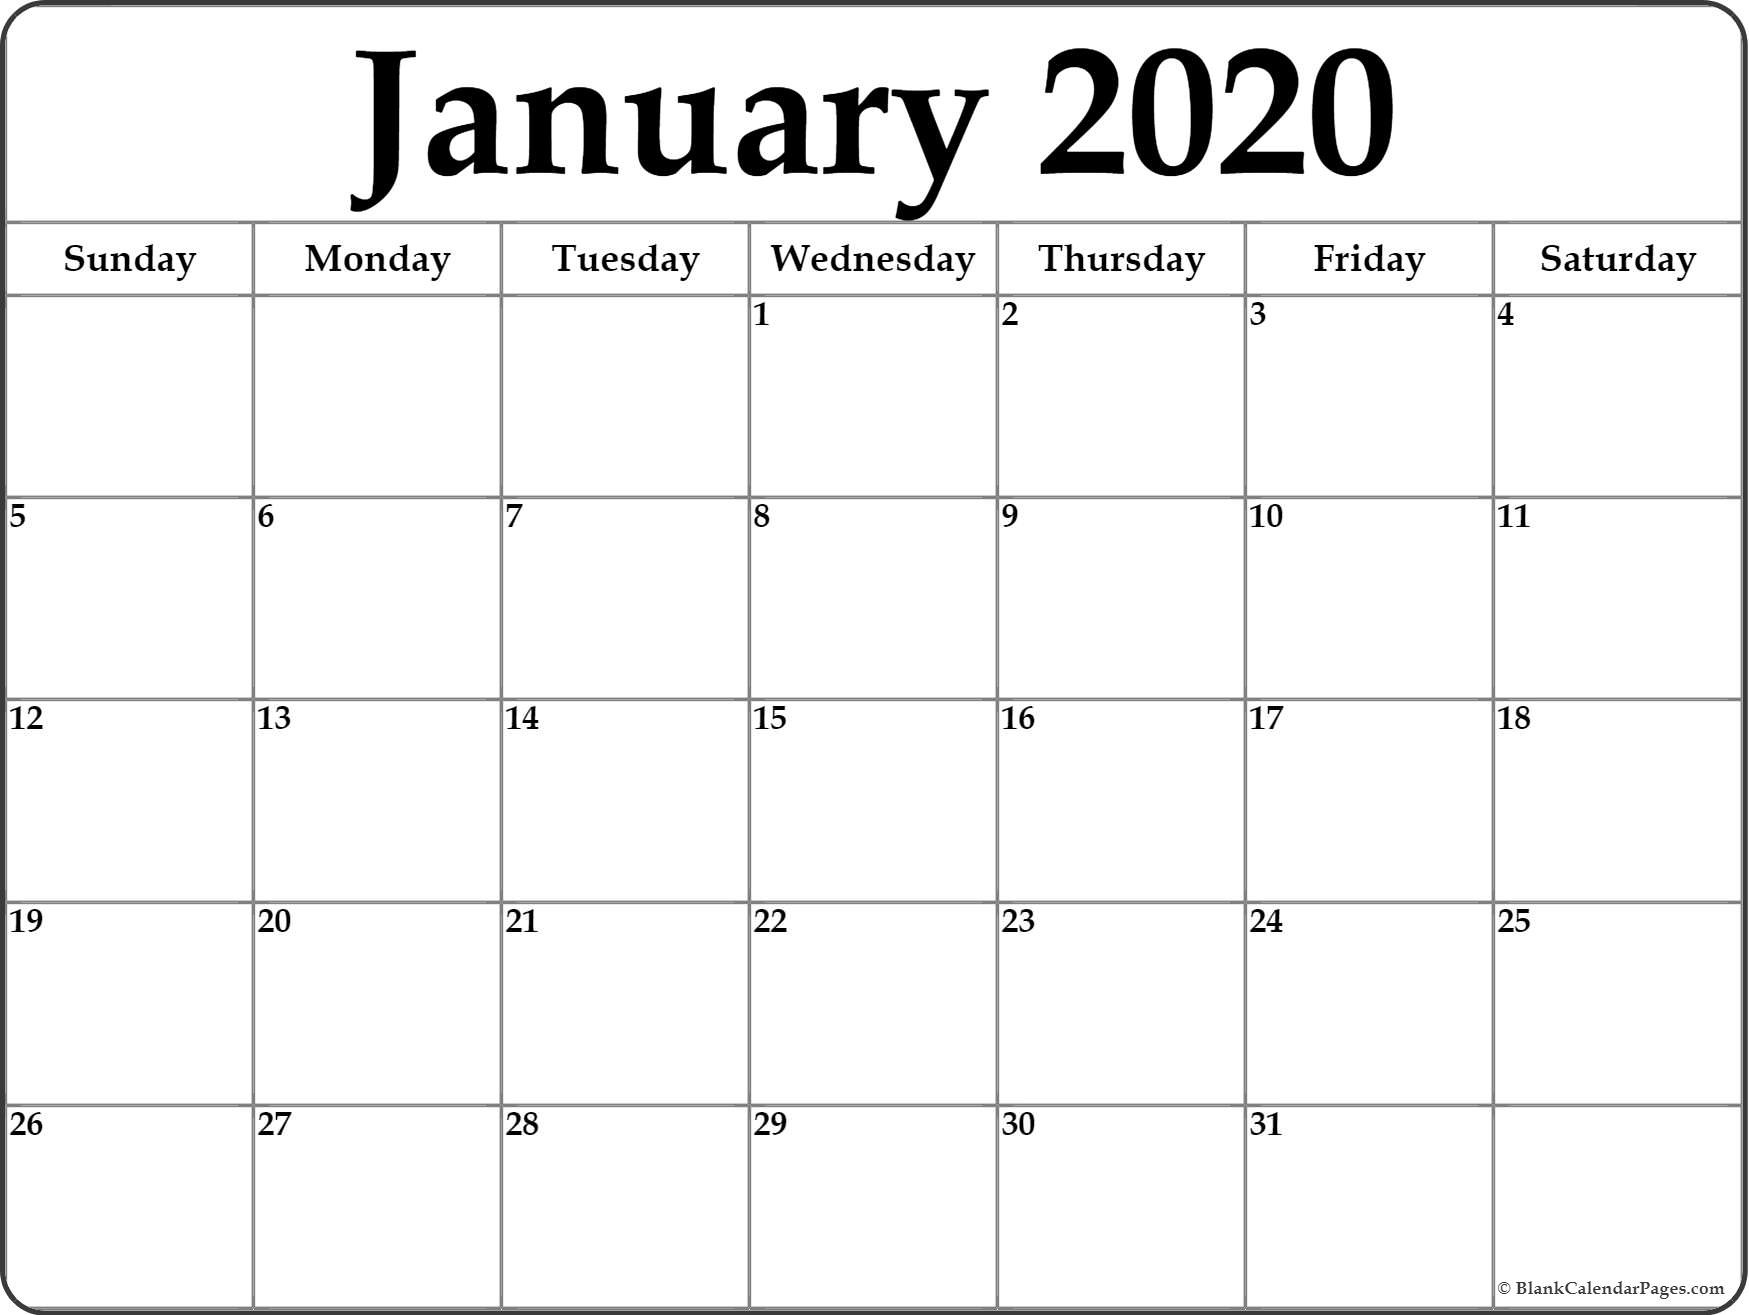 January 2020 Calendar | Free Printable Monthly Calendars  Monthly Calendar 2020